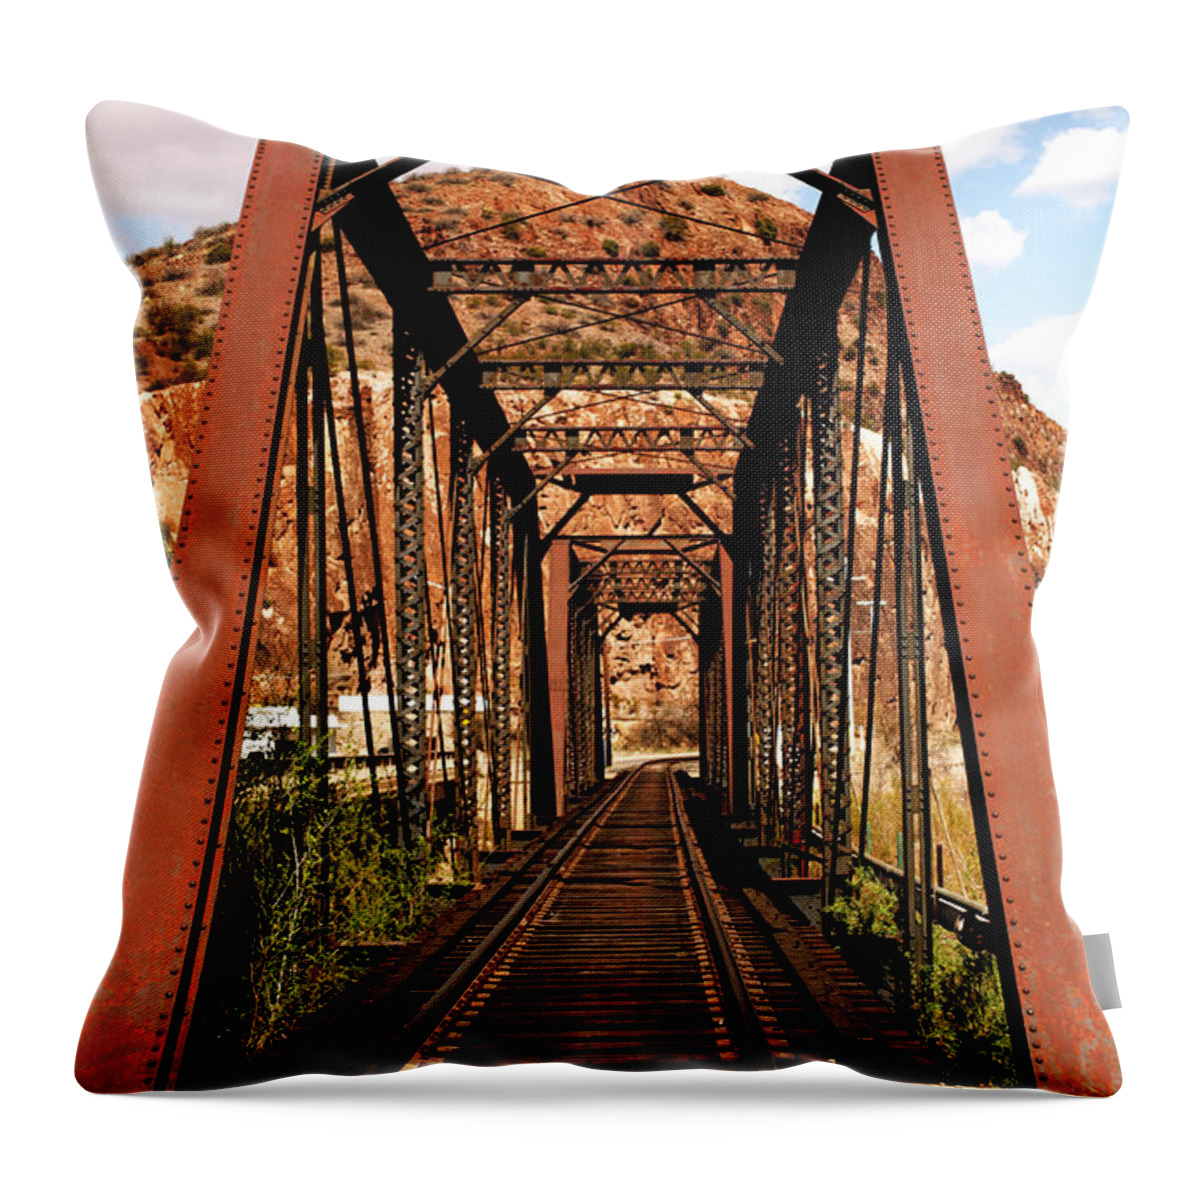 Railroad Throw Pillow featuring the photograph Railroad Bridge by Charles Benavidez